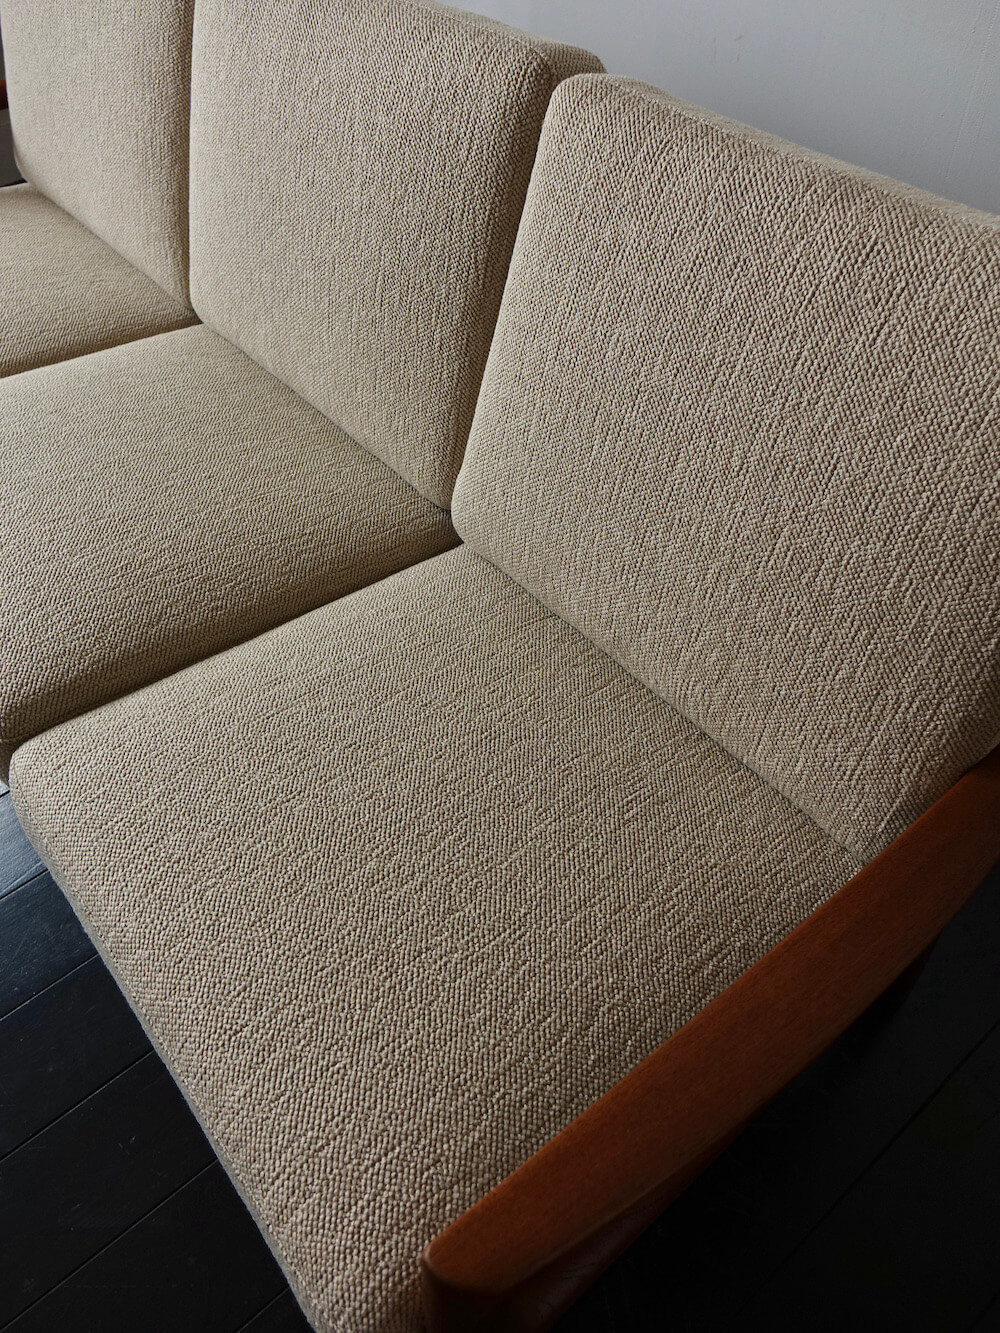 Model.169 Senator sofa by Ole Wanscher for France & Son